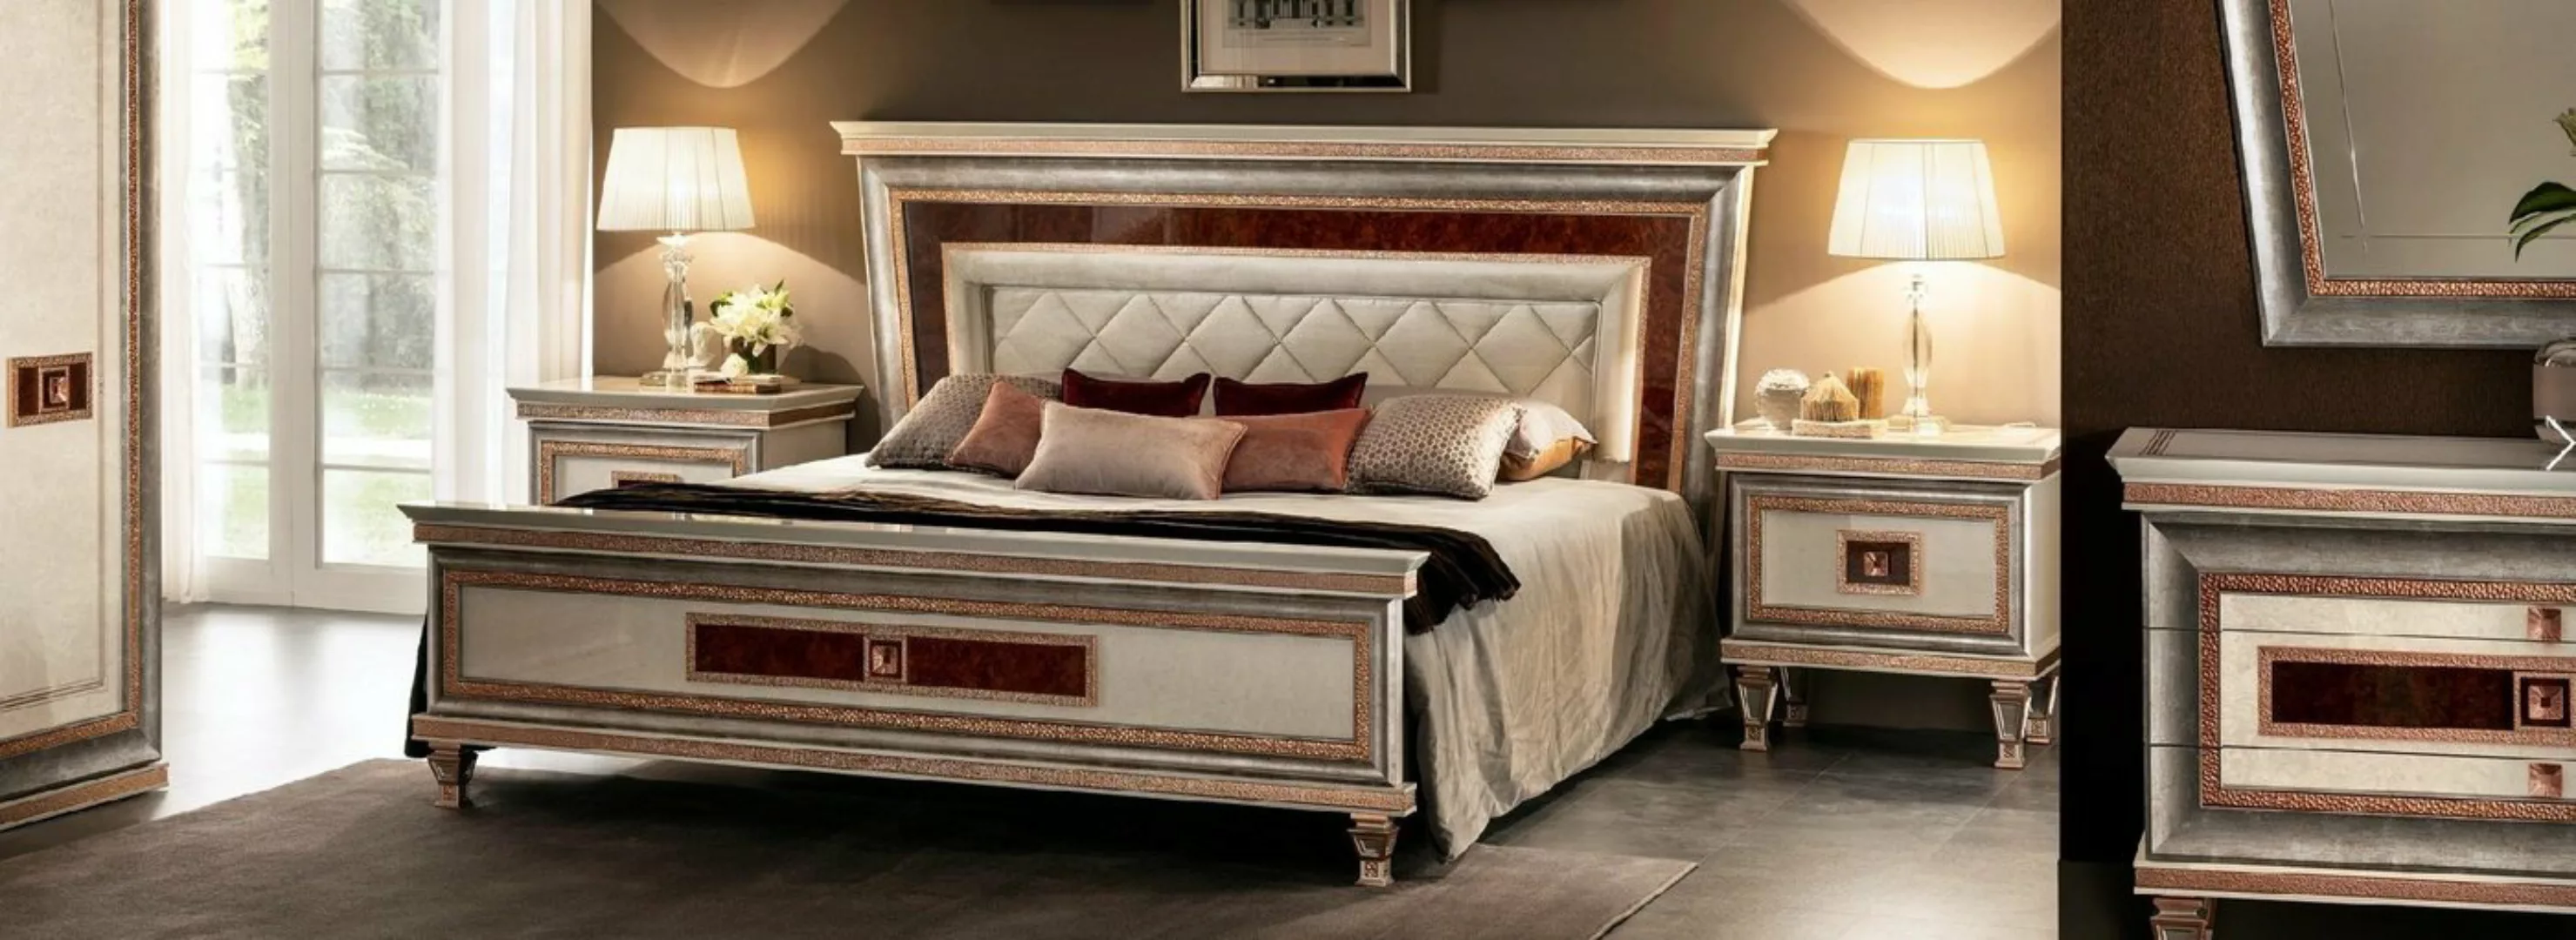 JVmoebel Bett Bett Betten Polster Doppel Ehe Luxus Leder Moderne Schlafzimm günstig online kaufen